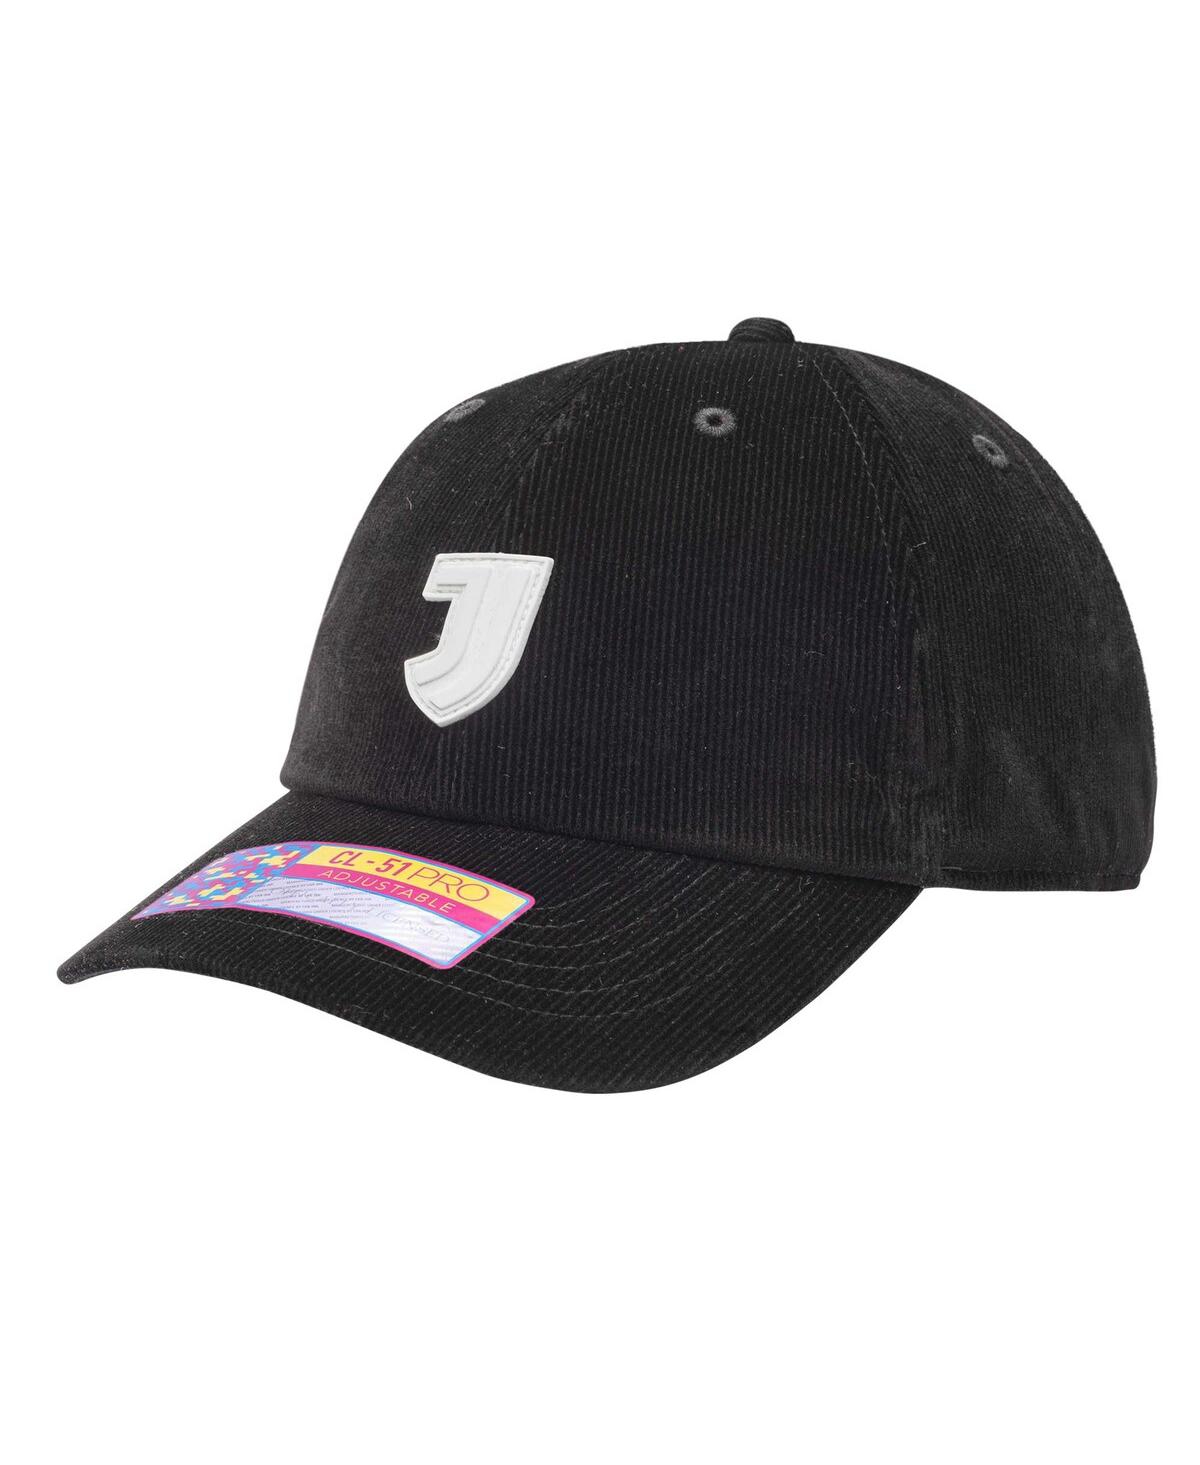 Fan Ink Men's Black Juventus Casuals Classic Adjustable Hat